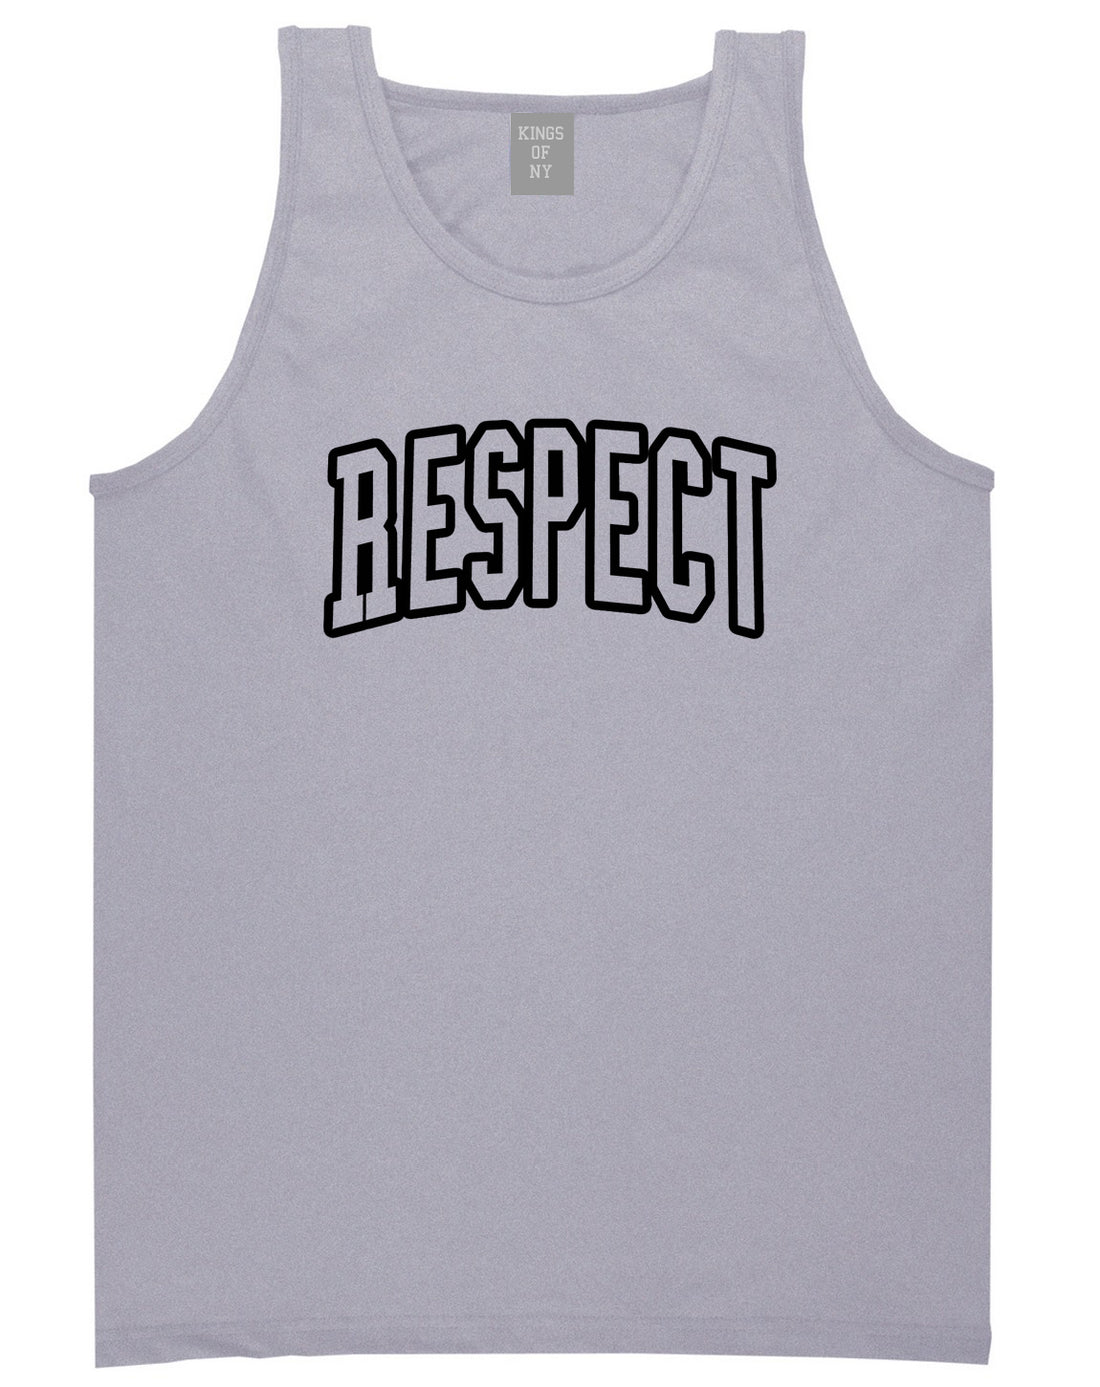 Respect Outline Mens Tank Top T-Shirt Grey